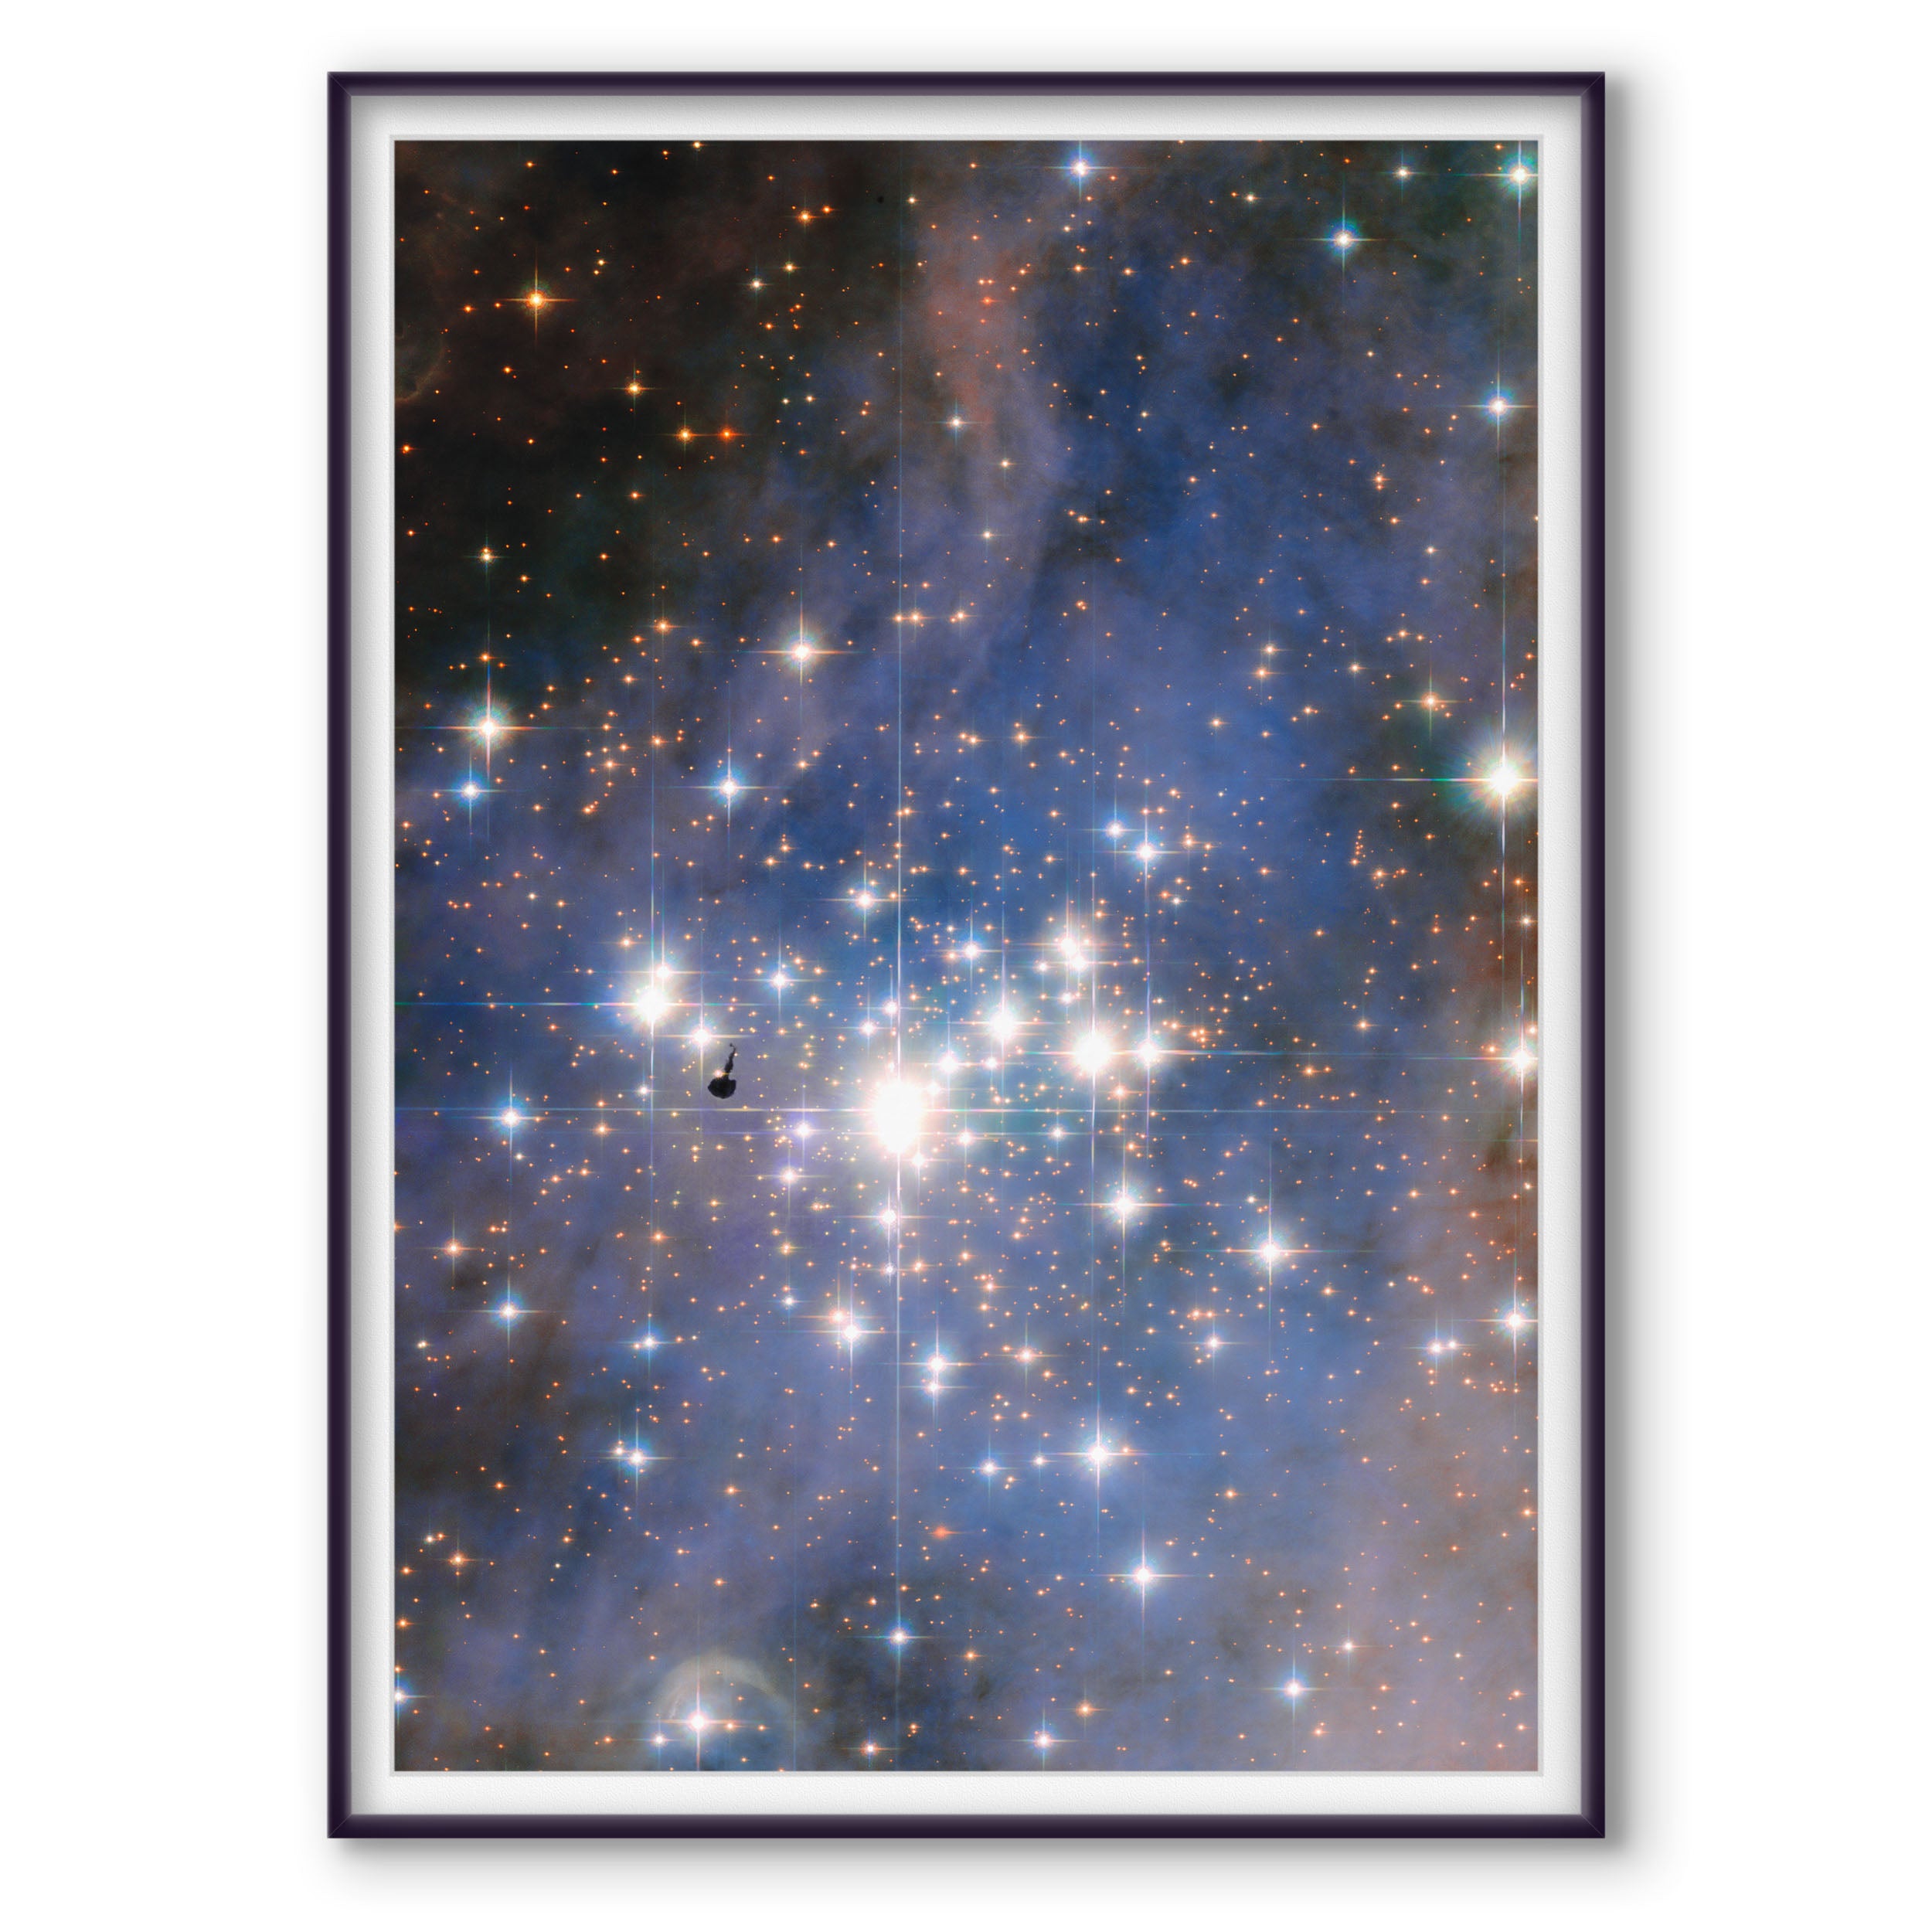 Trumpler 14 Star Cluster